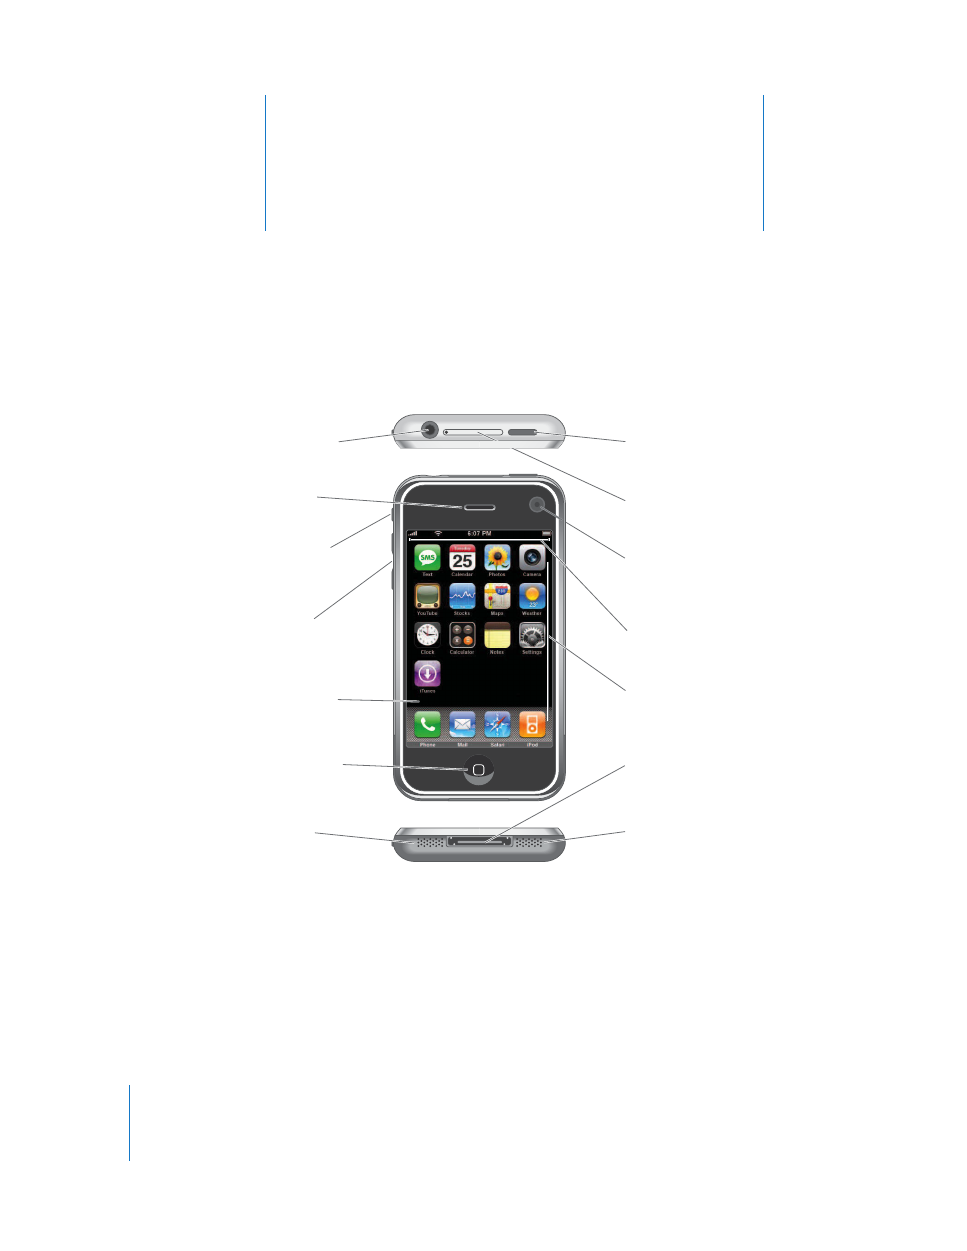 Apple iphone 8 user manual